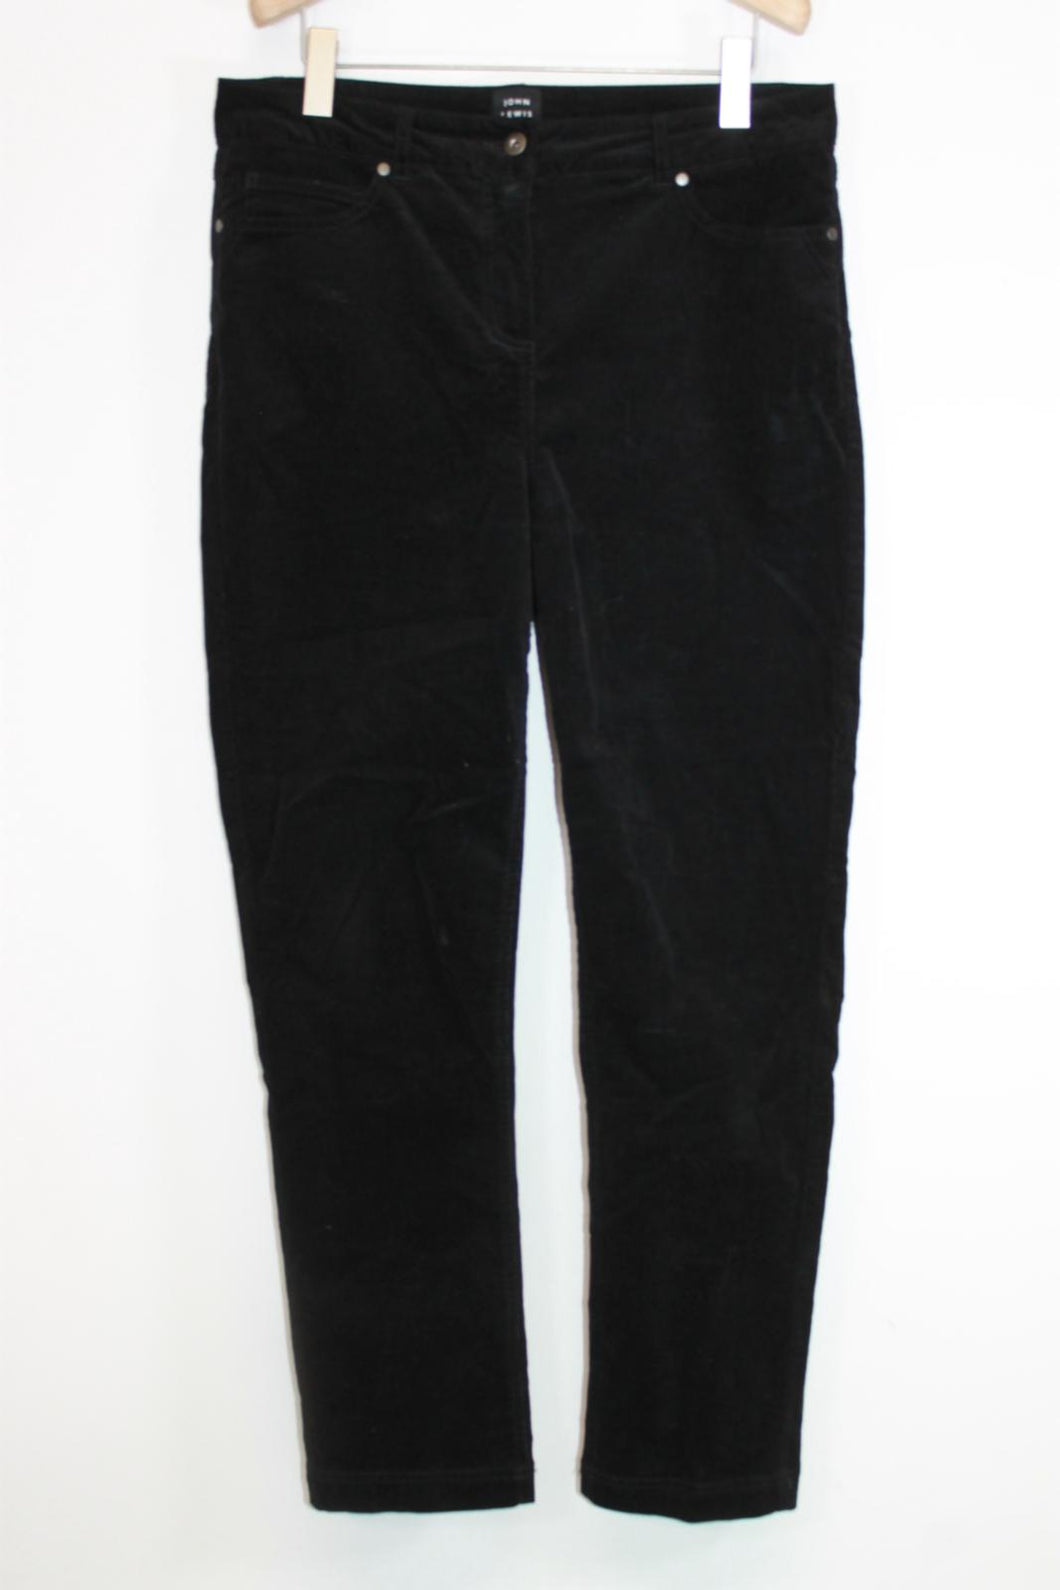 JOHN LEWIS Ladies Black Cotton Corderoy Chino Trousers EU42 UK14